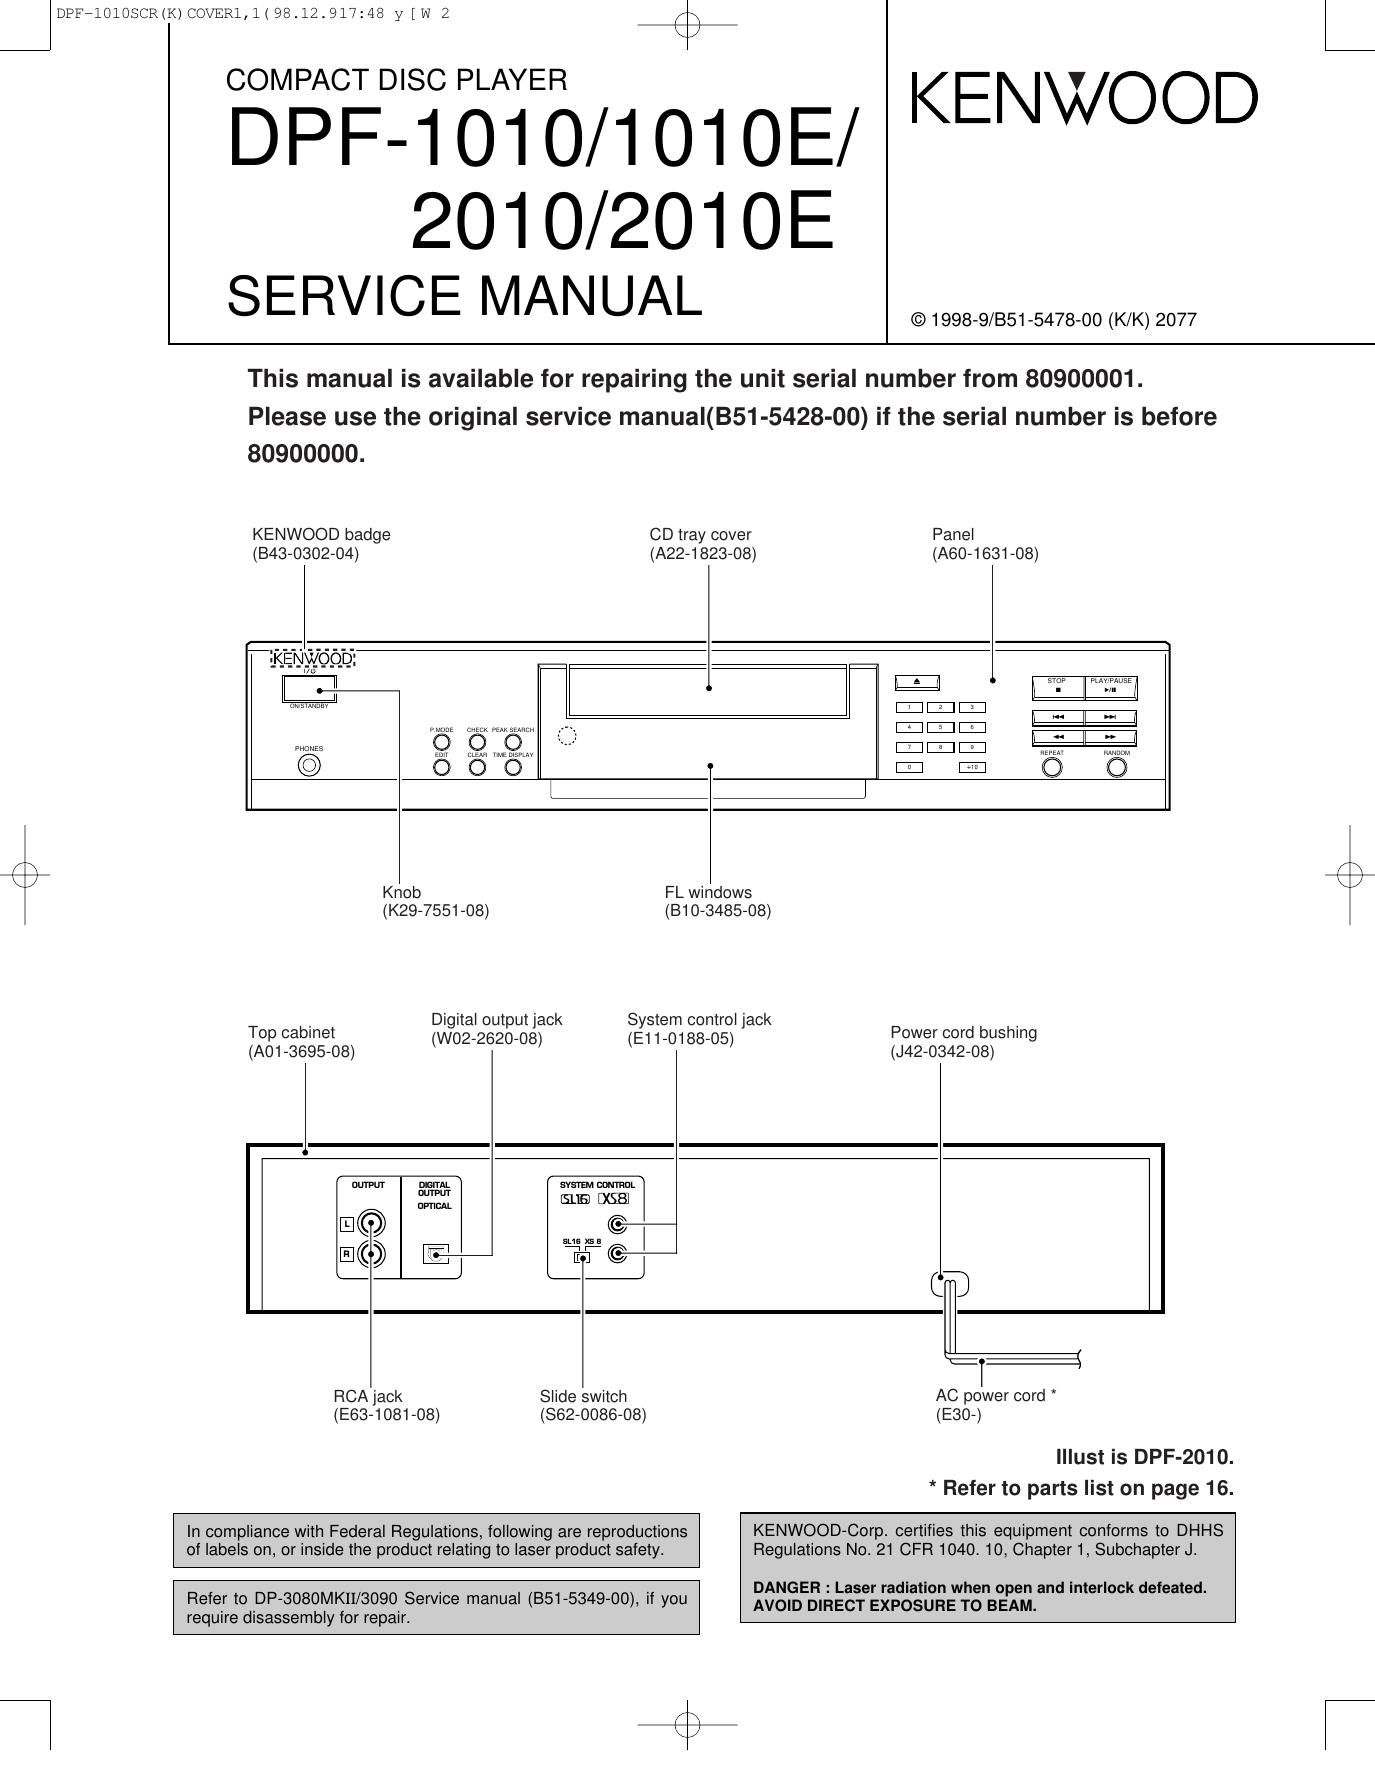 Kenwood DPF 1010 E Service Manual